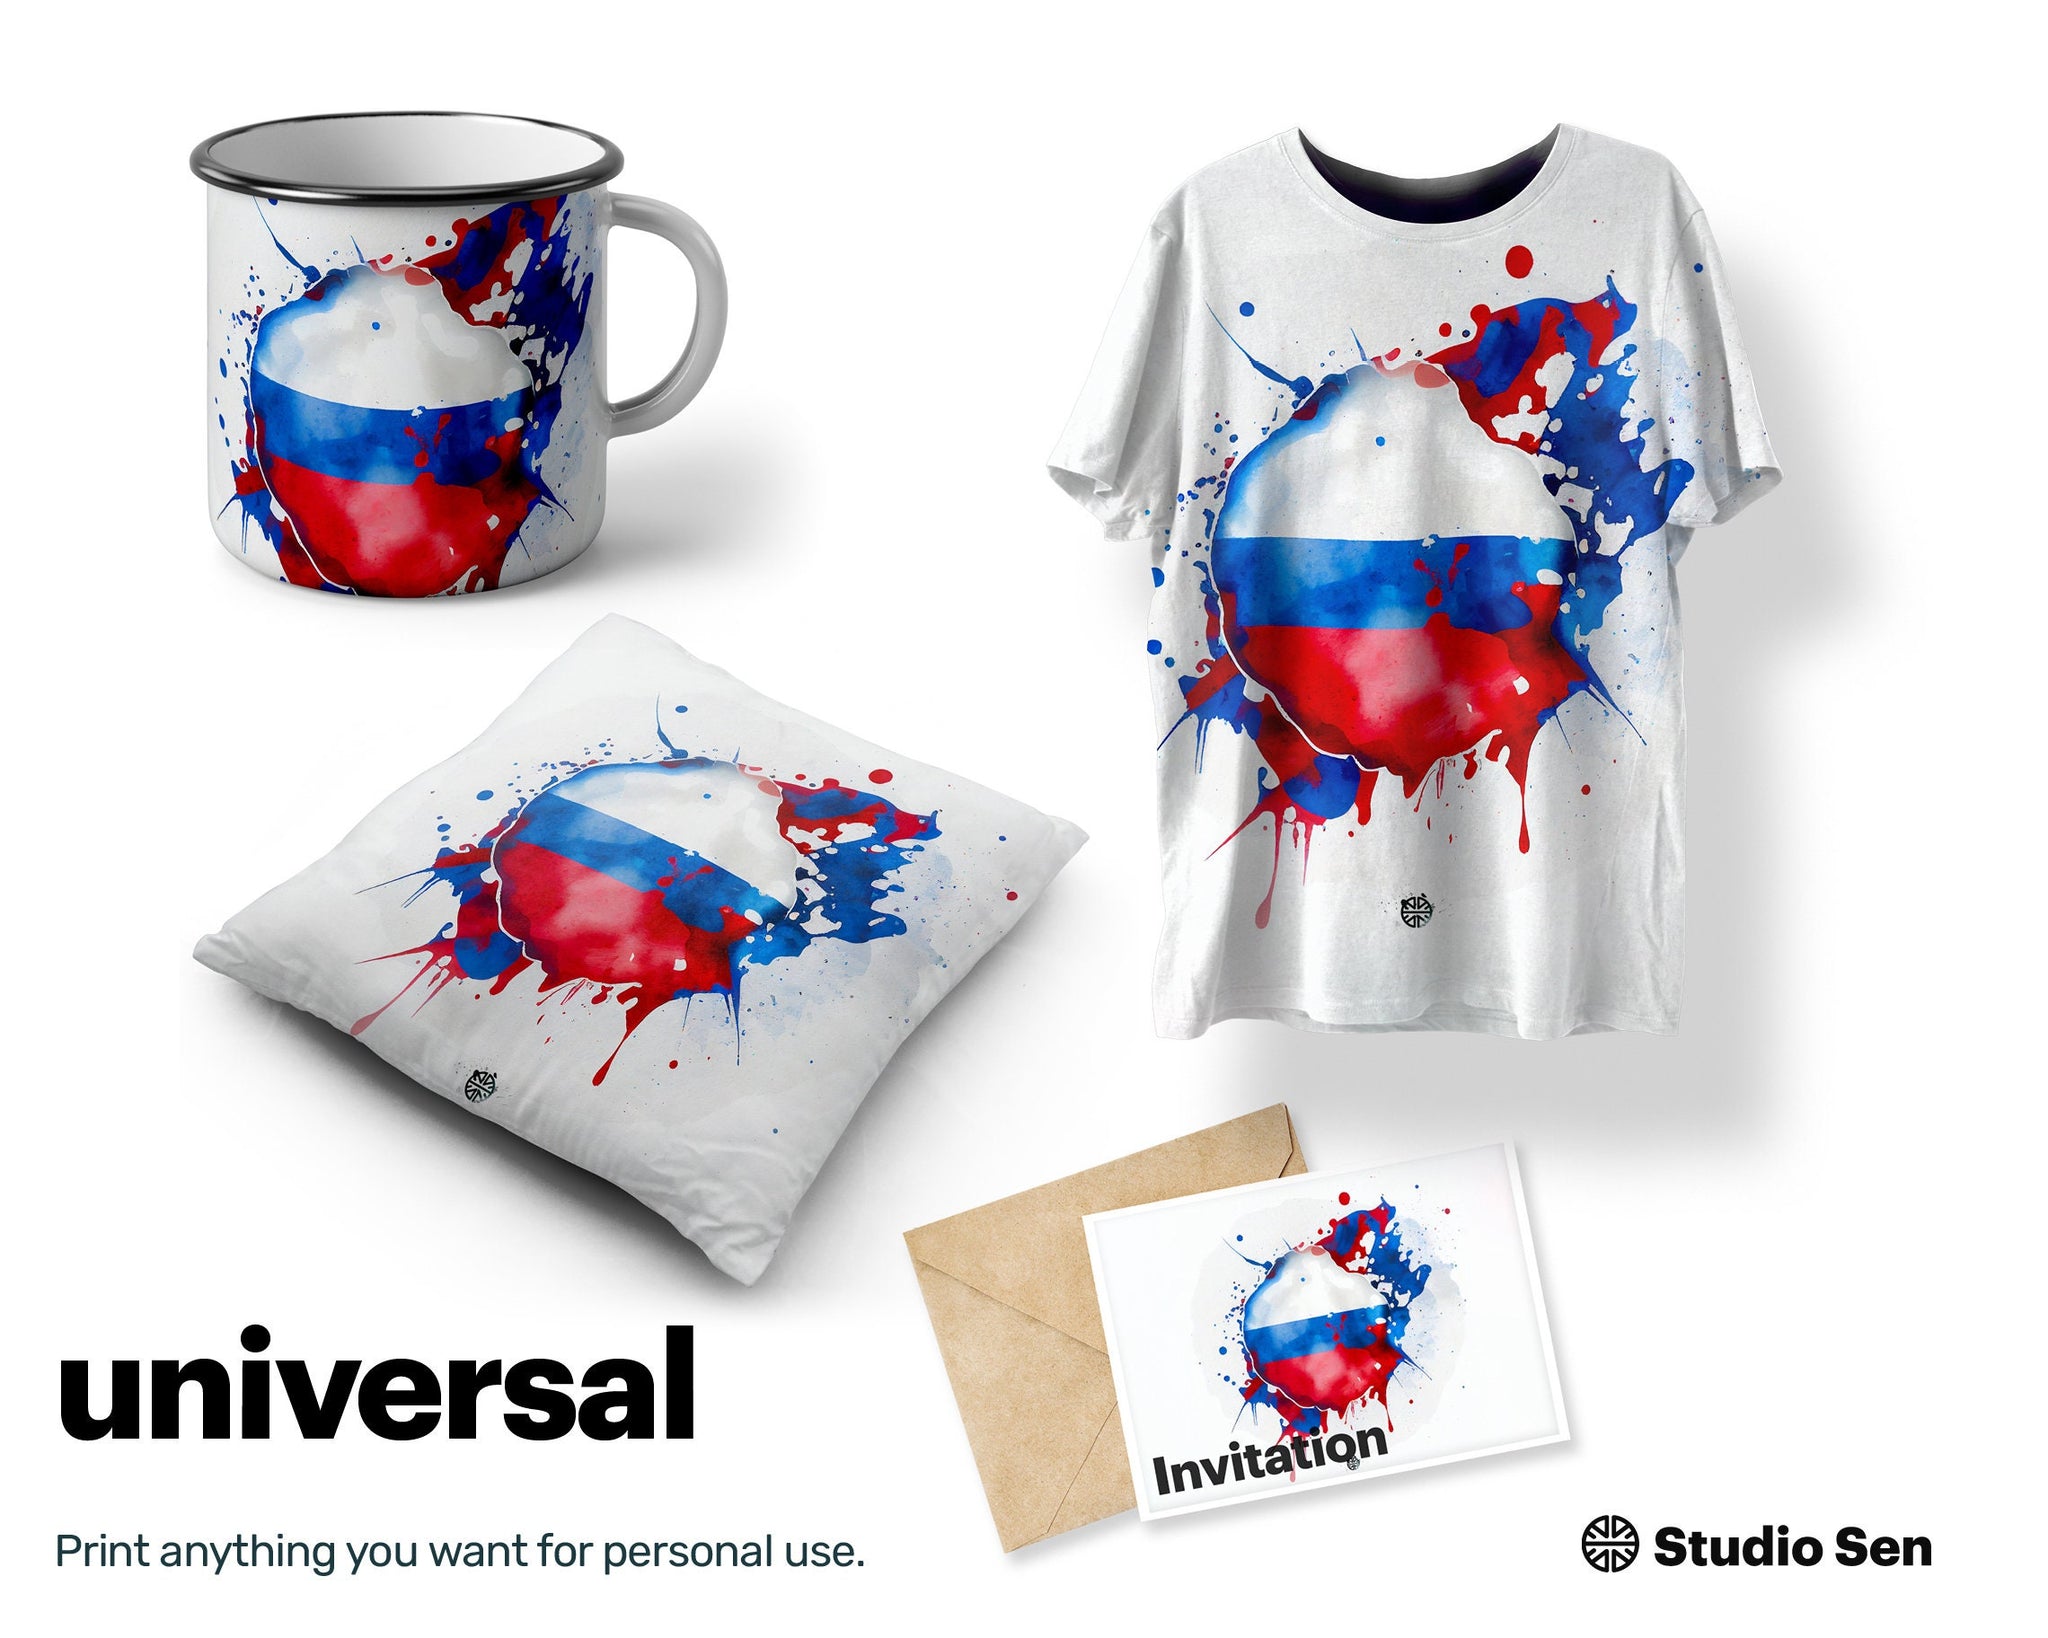 Clever Fantastic Slovak flag, Dancing Happy Digital Download, Downloadable Zany Liquid Nifty Marvelous Design